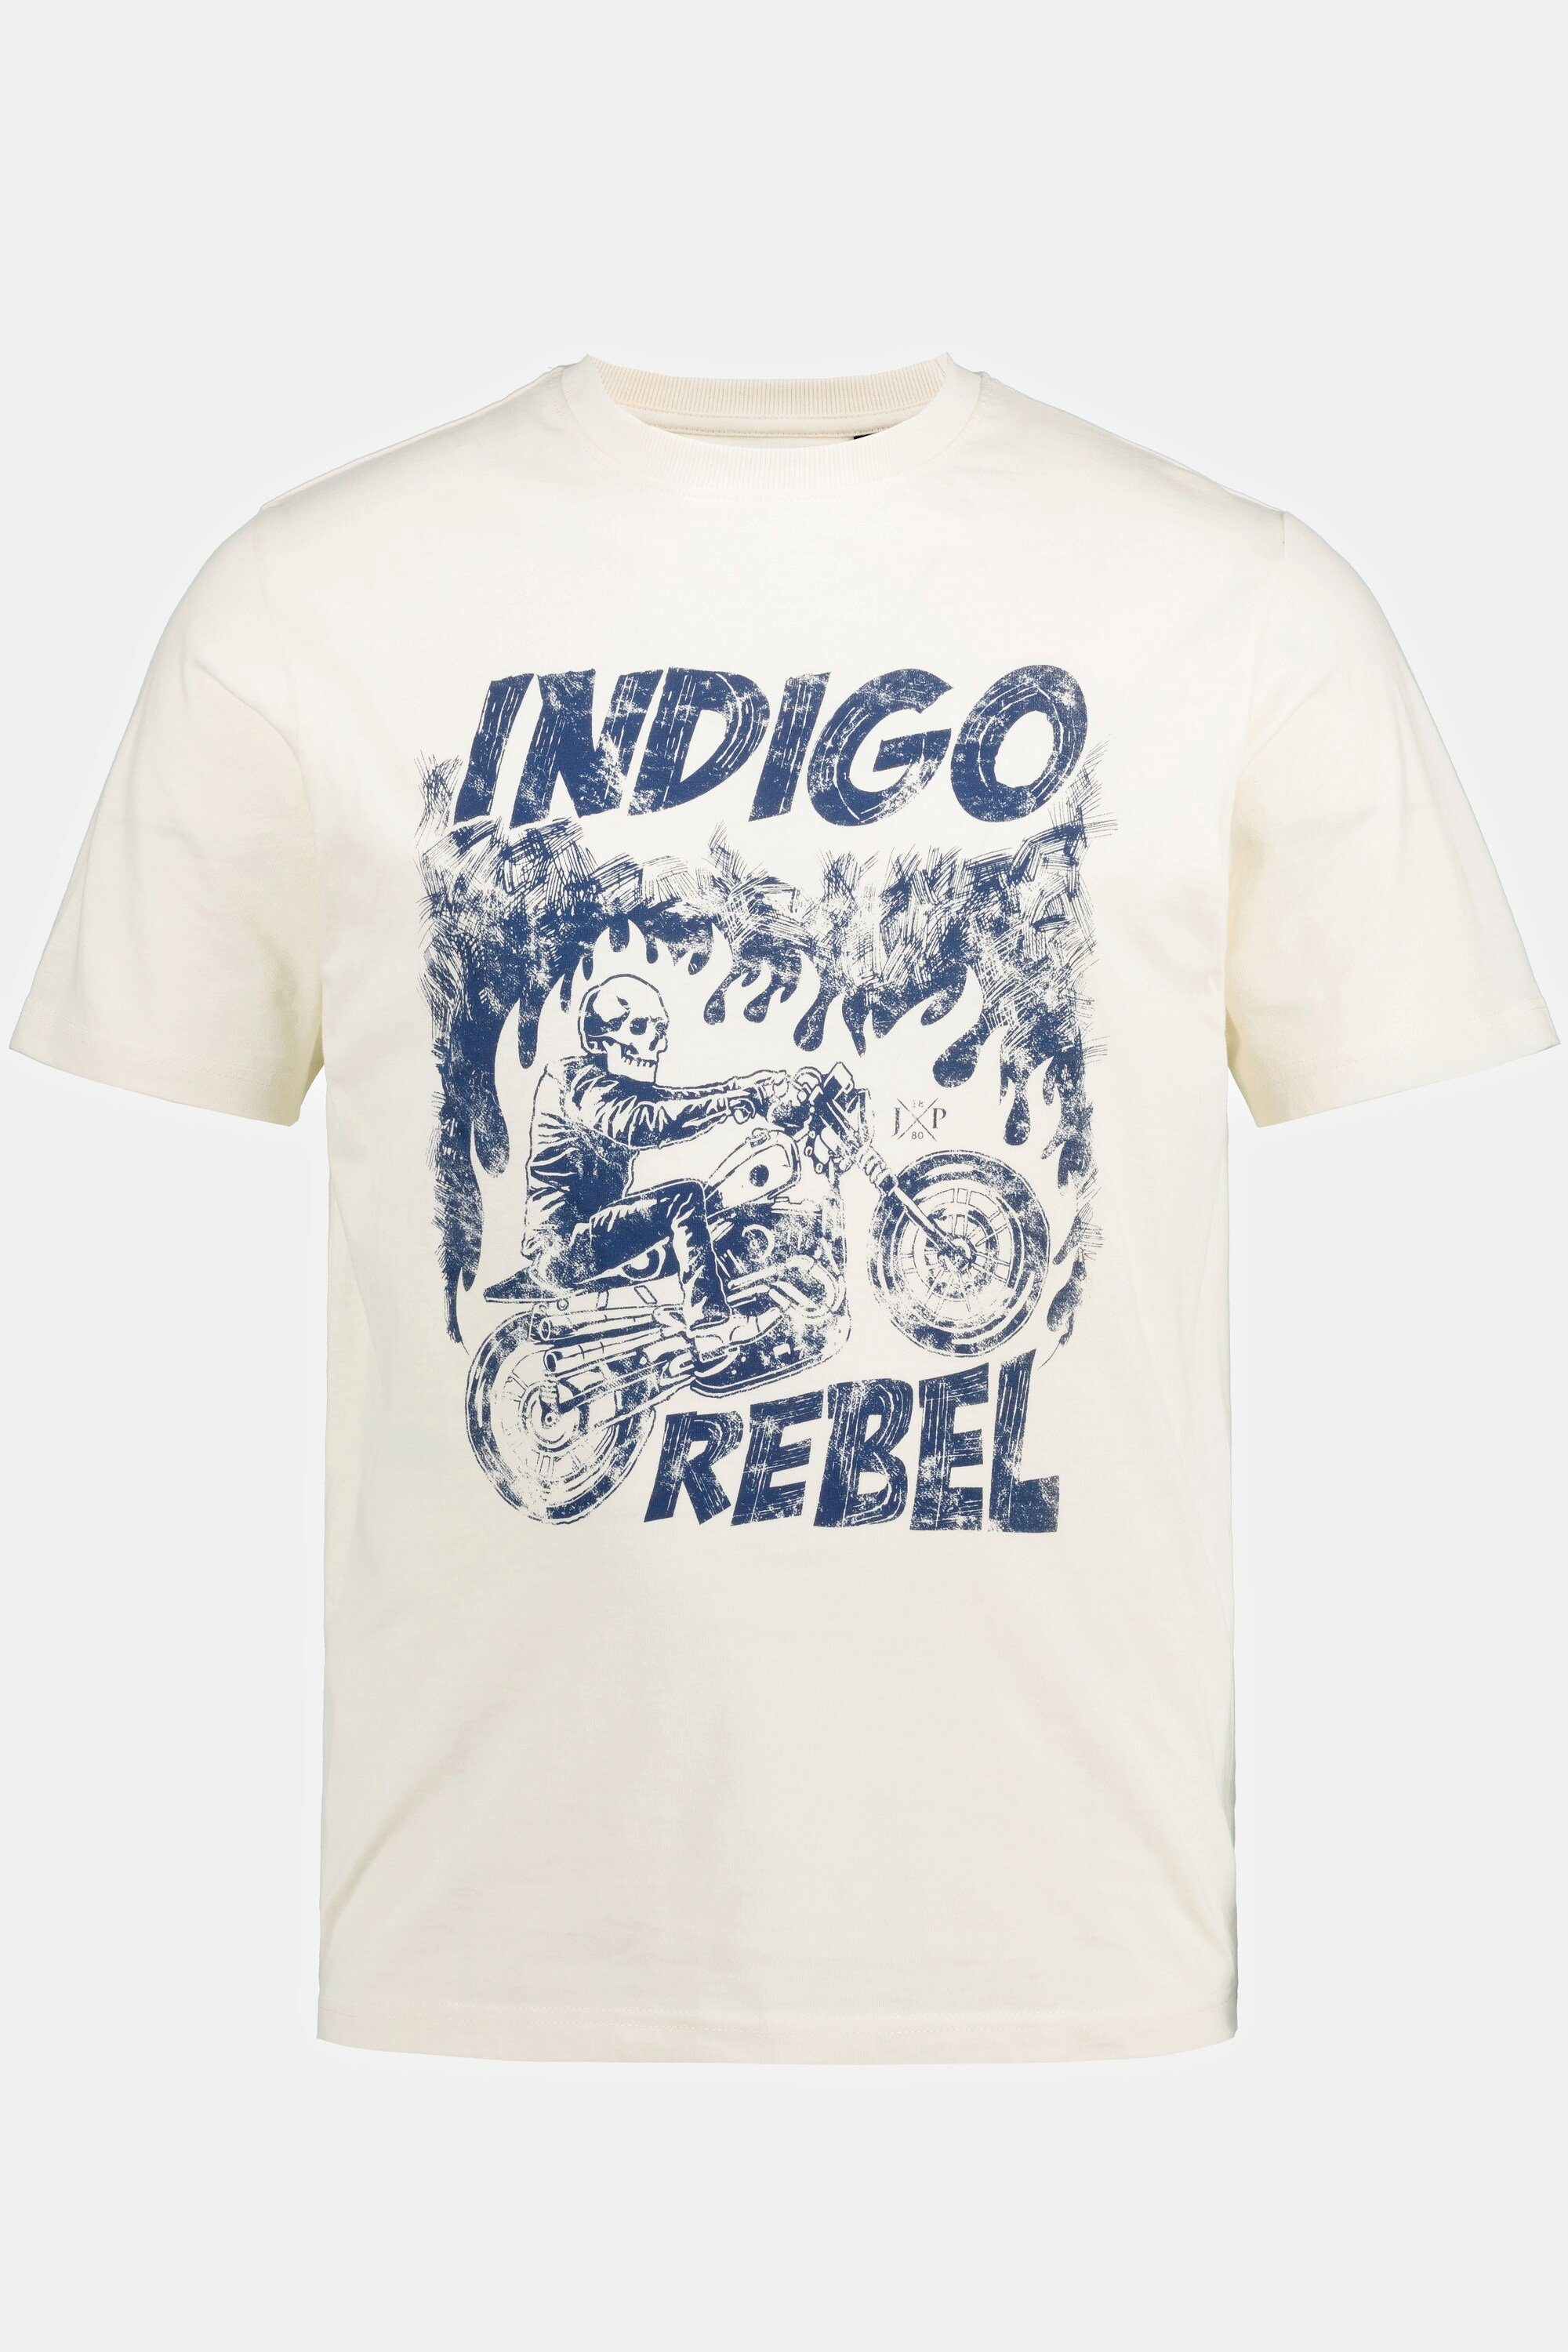 JP1880 T-Shirt PrintRundhals Halbarm T-Shirt